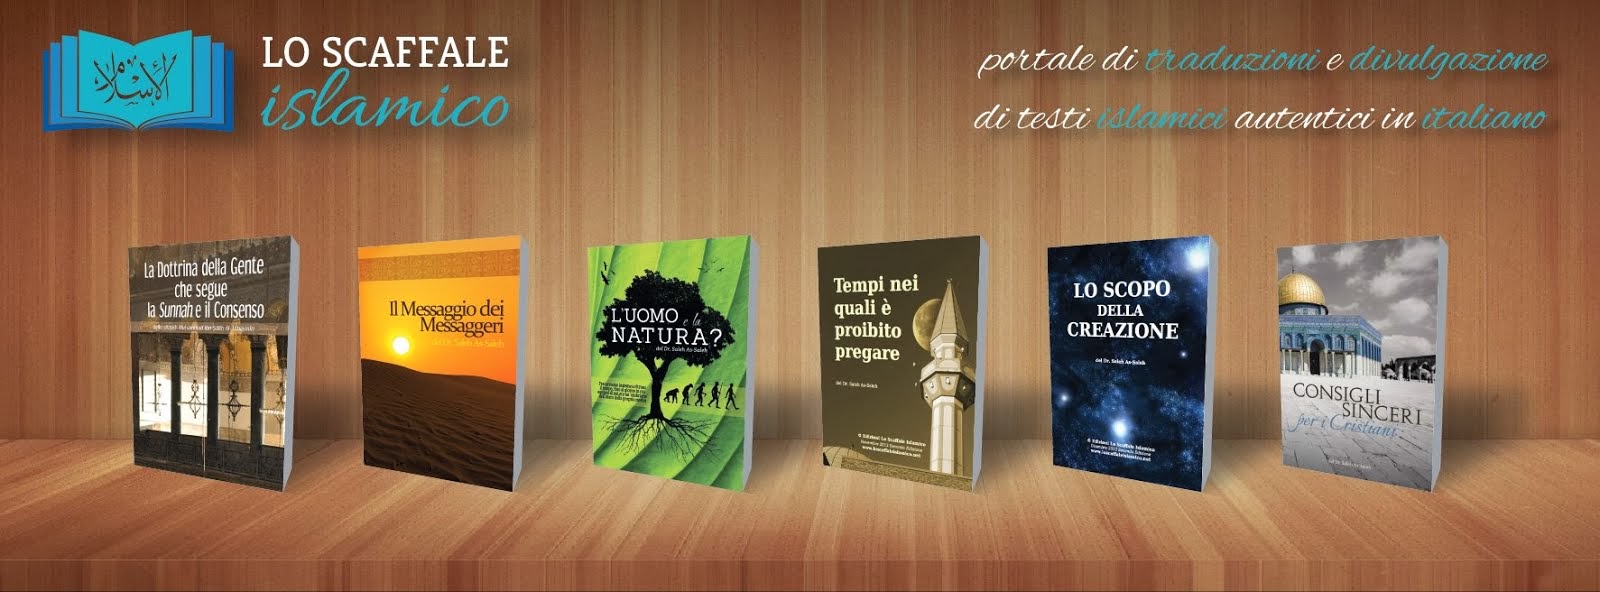 Libreria islamica online